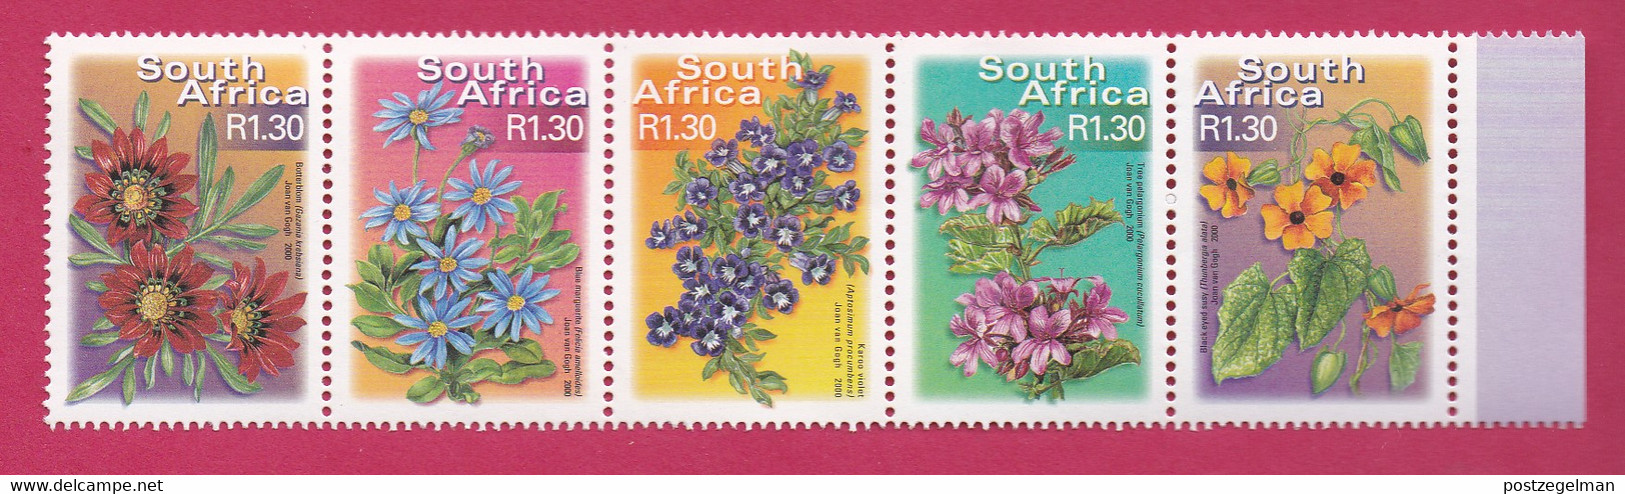 RSA, 2000, MNH Stamp(s)  , Strip Of 5 Flowers, SACC Nr(s).  1304-1308, Scannr. M9081 - Unused Stamps